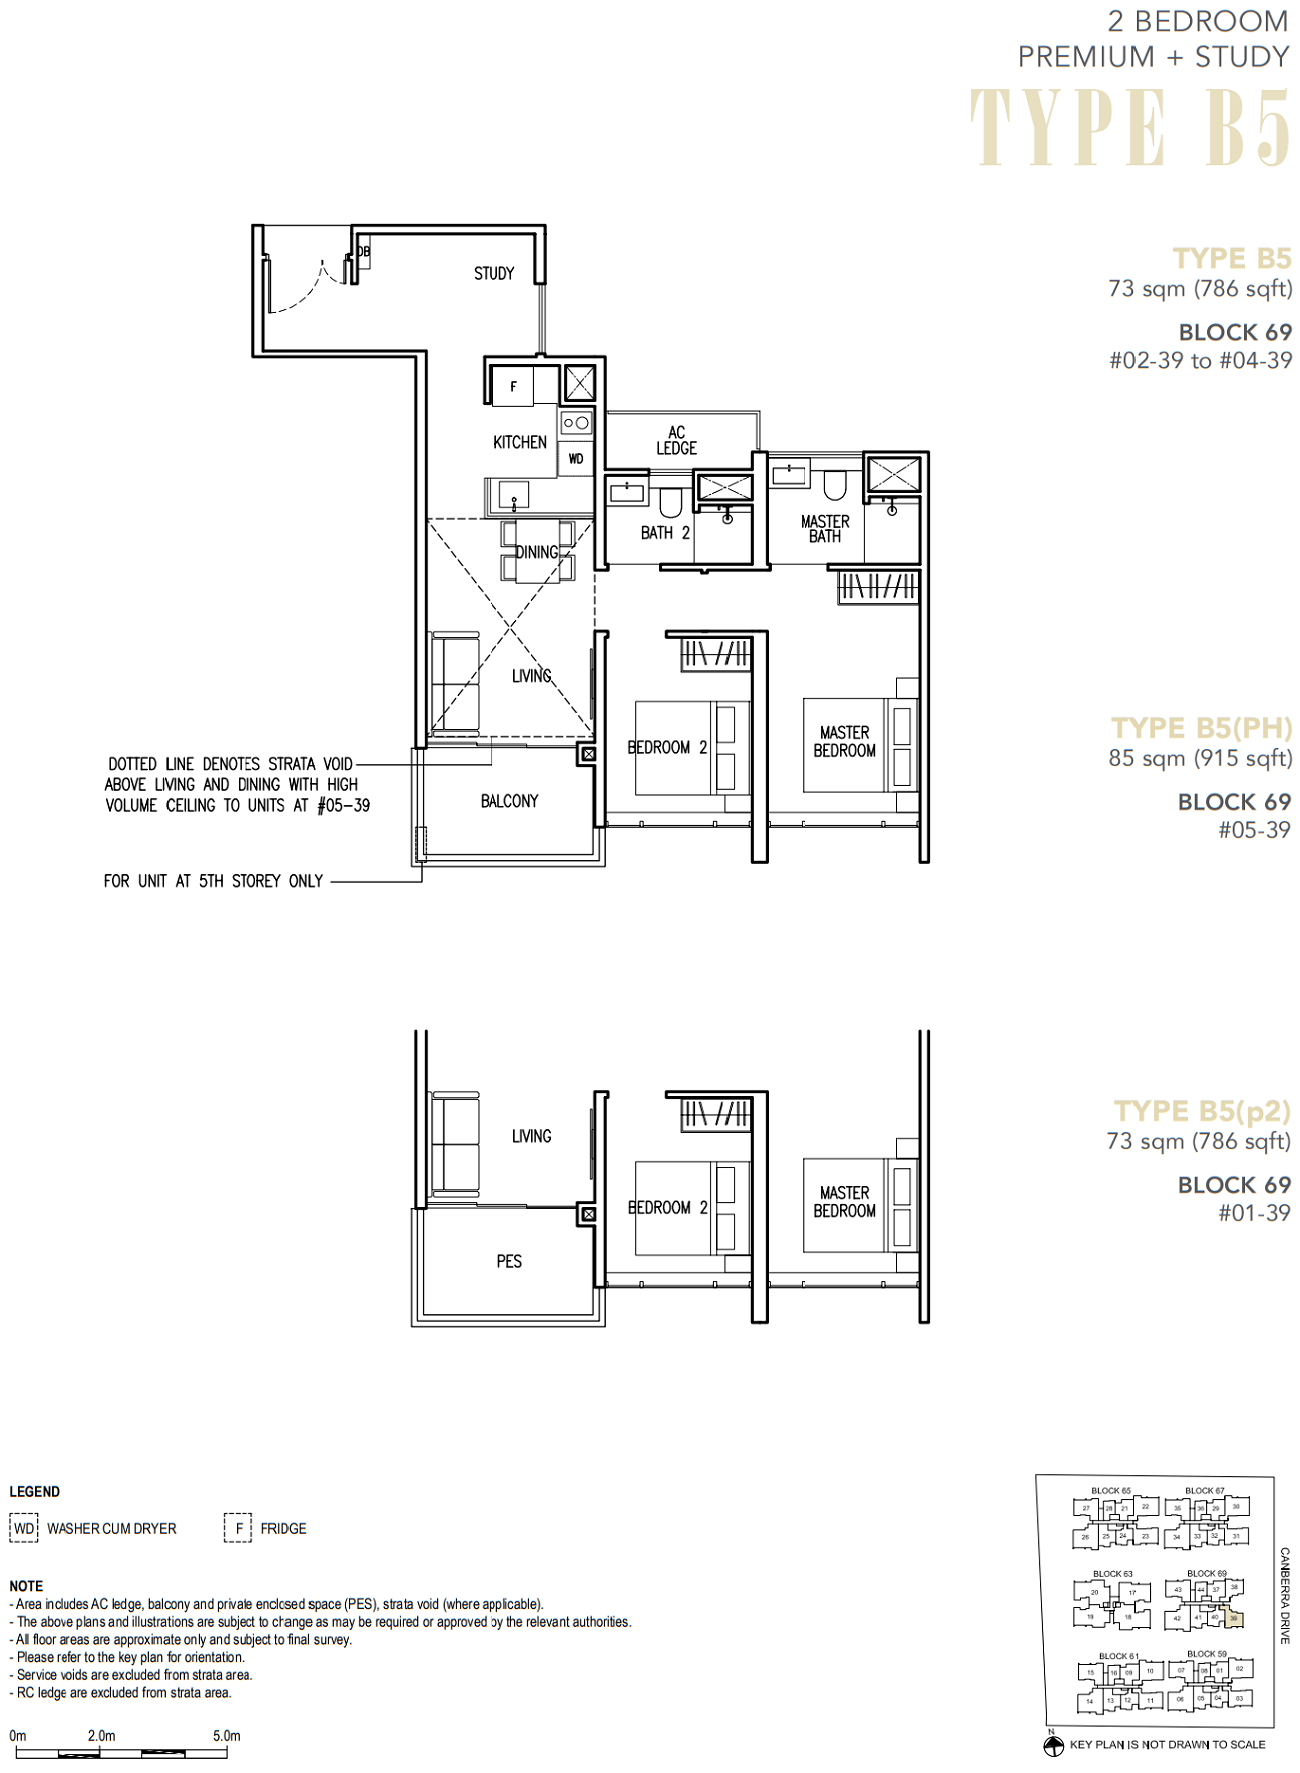 The Commodore Floor Plan 2 Bedroom_Study Type B5 73_786